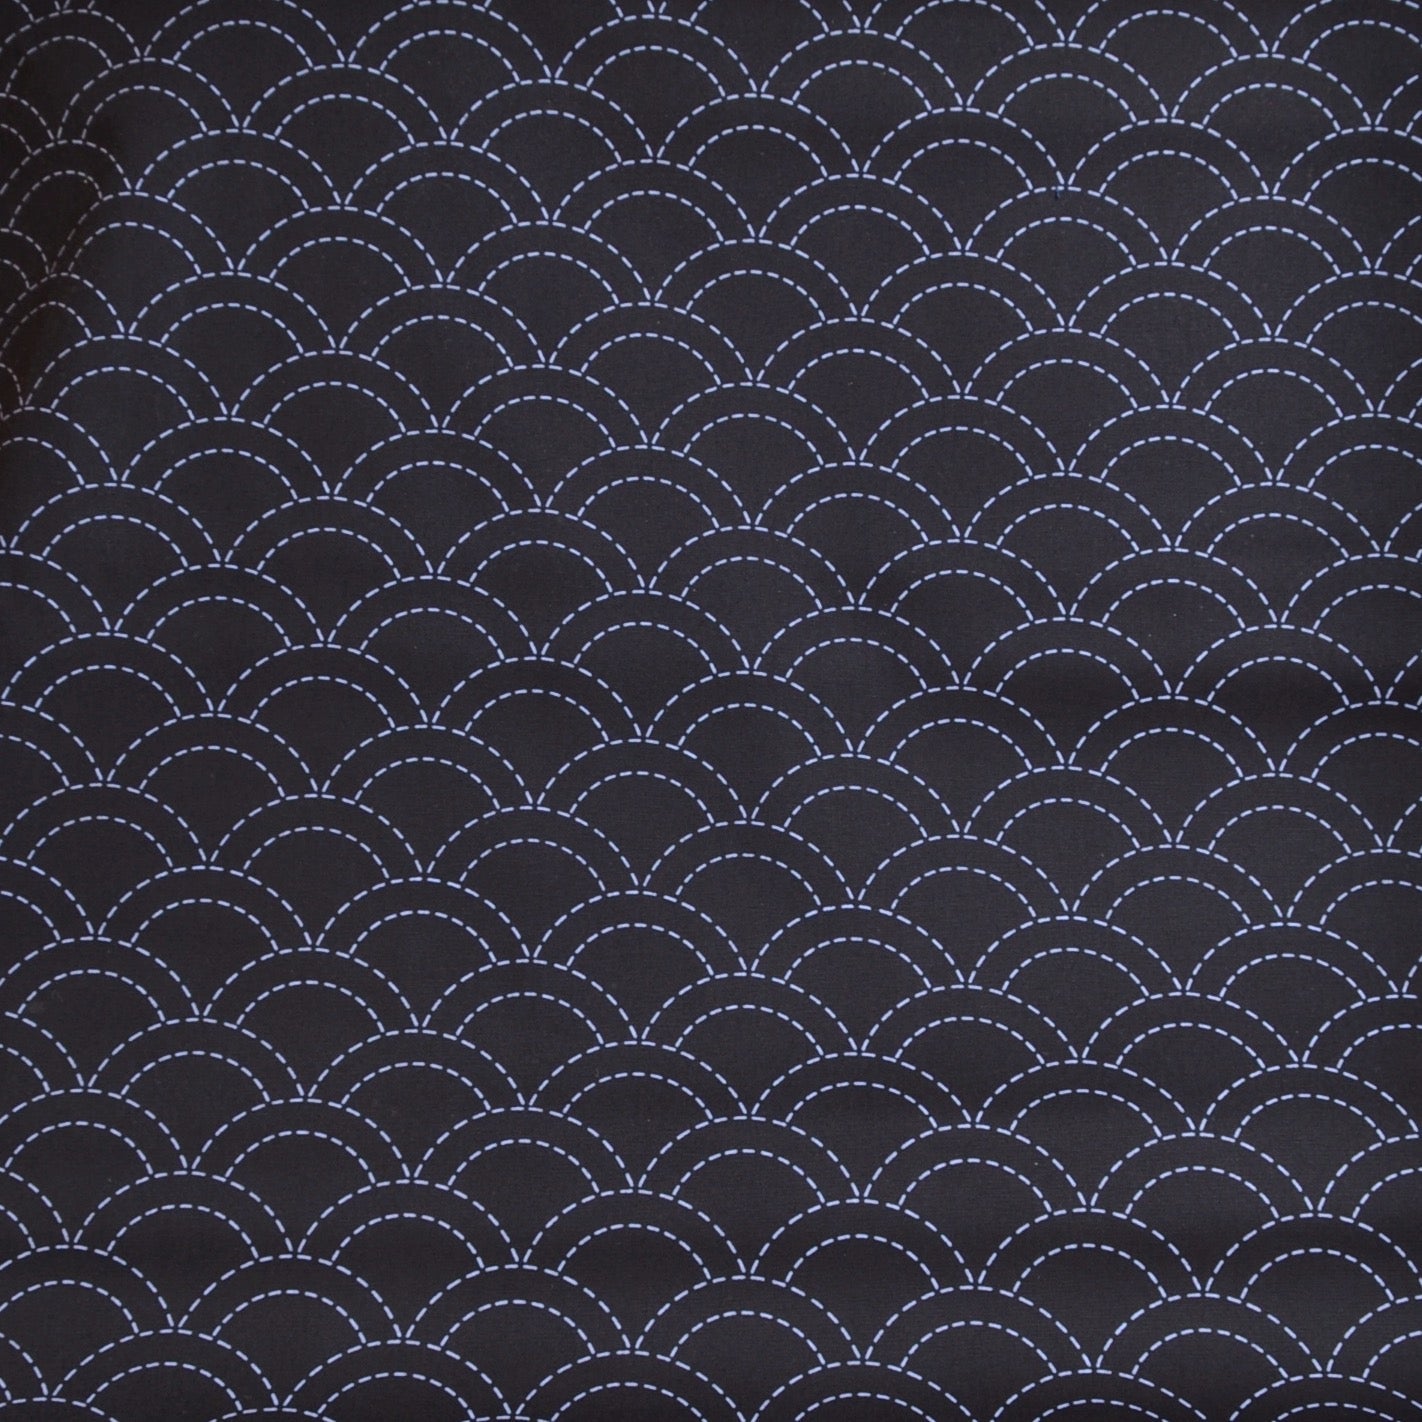 Cotton sashiko fabric from Japan